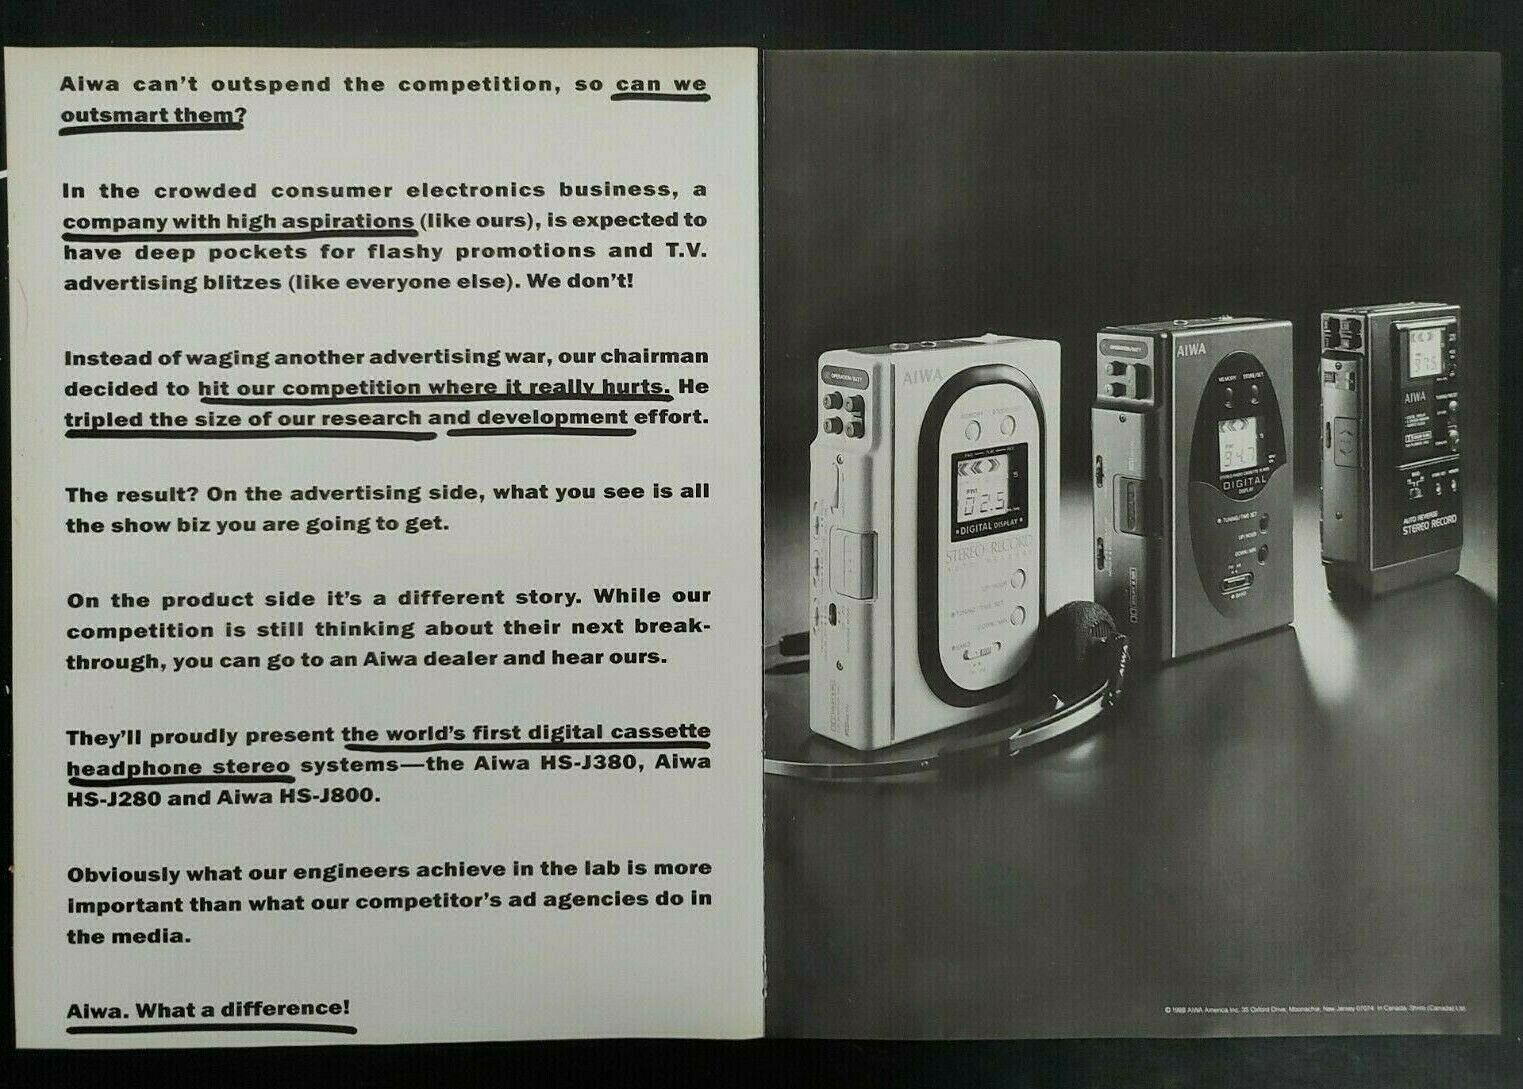 1989 Aiwa HS-J380 1st Digital Cassette Headset Stereo System Vintage Print Ad